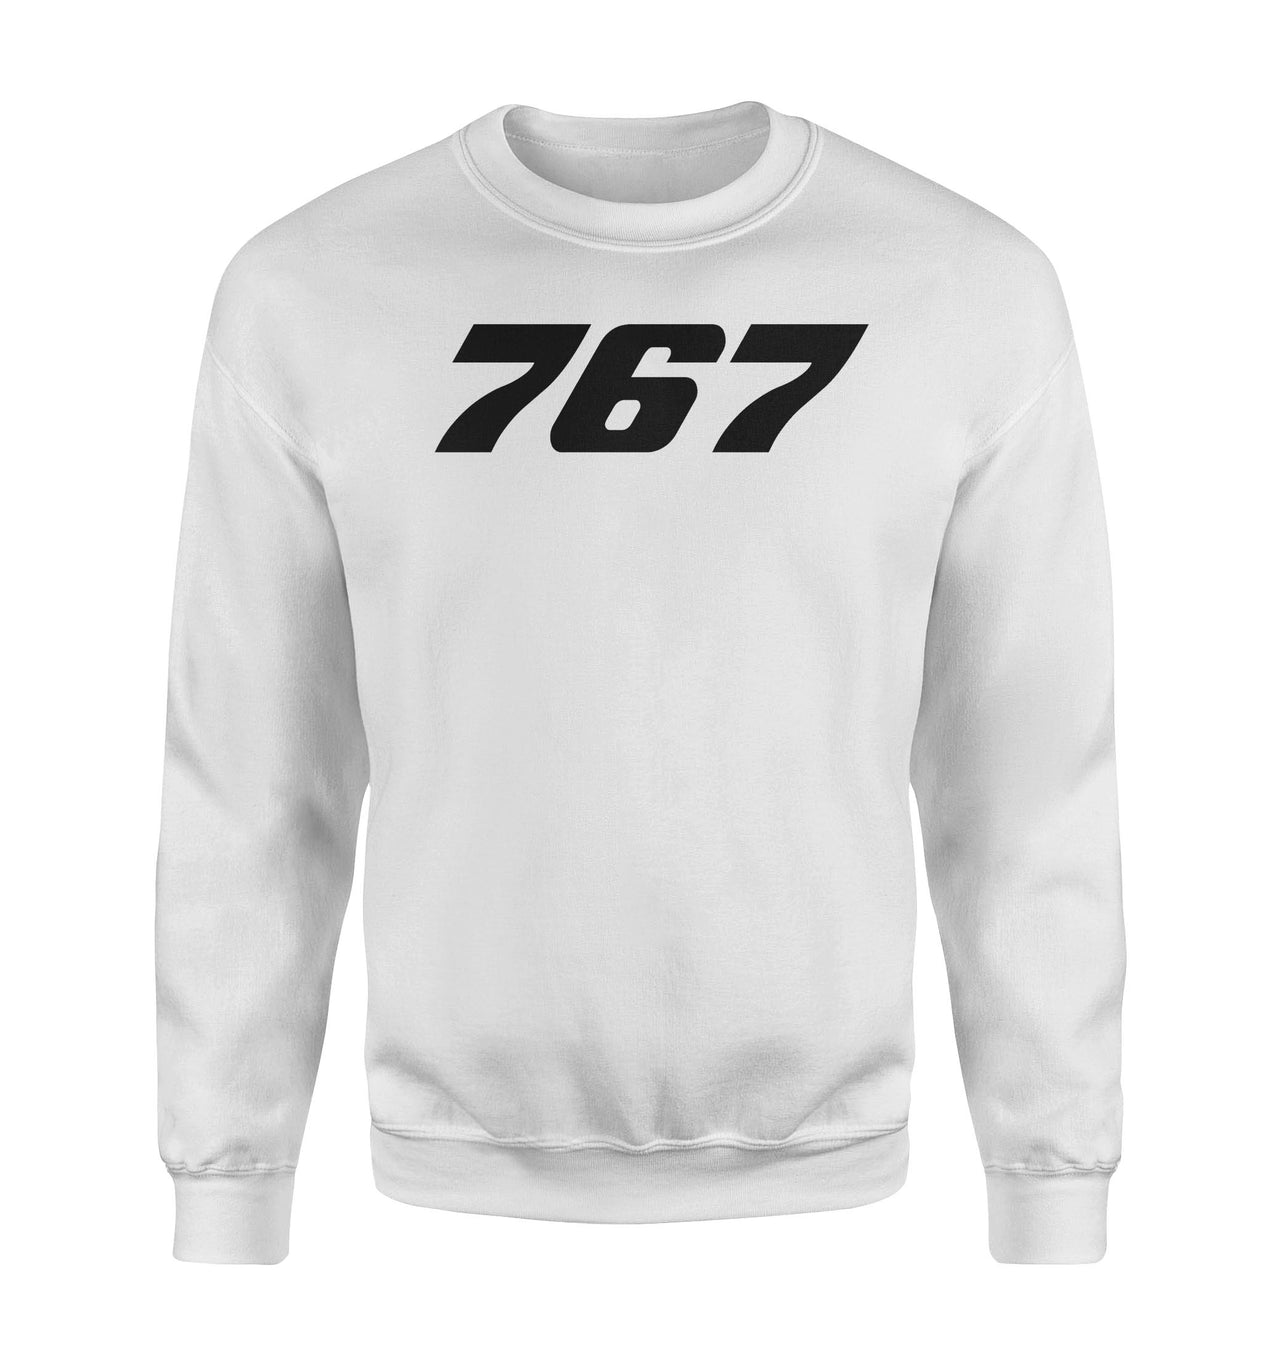 767 Flat Text Designed Sweatshirts